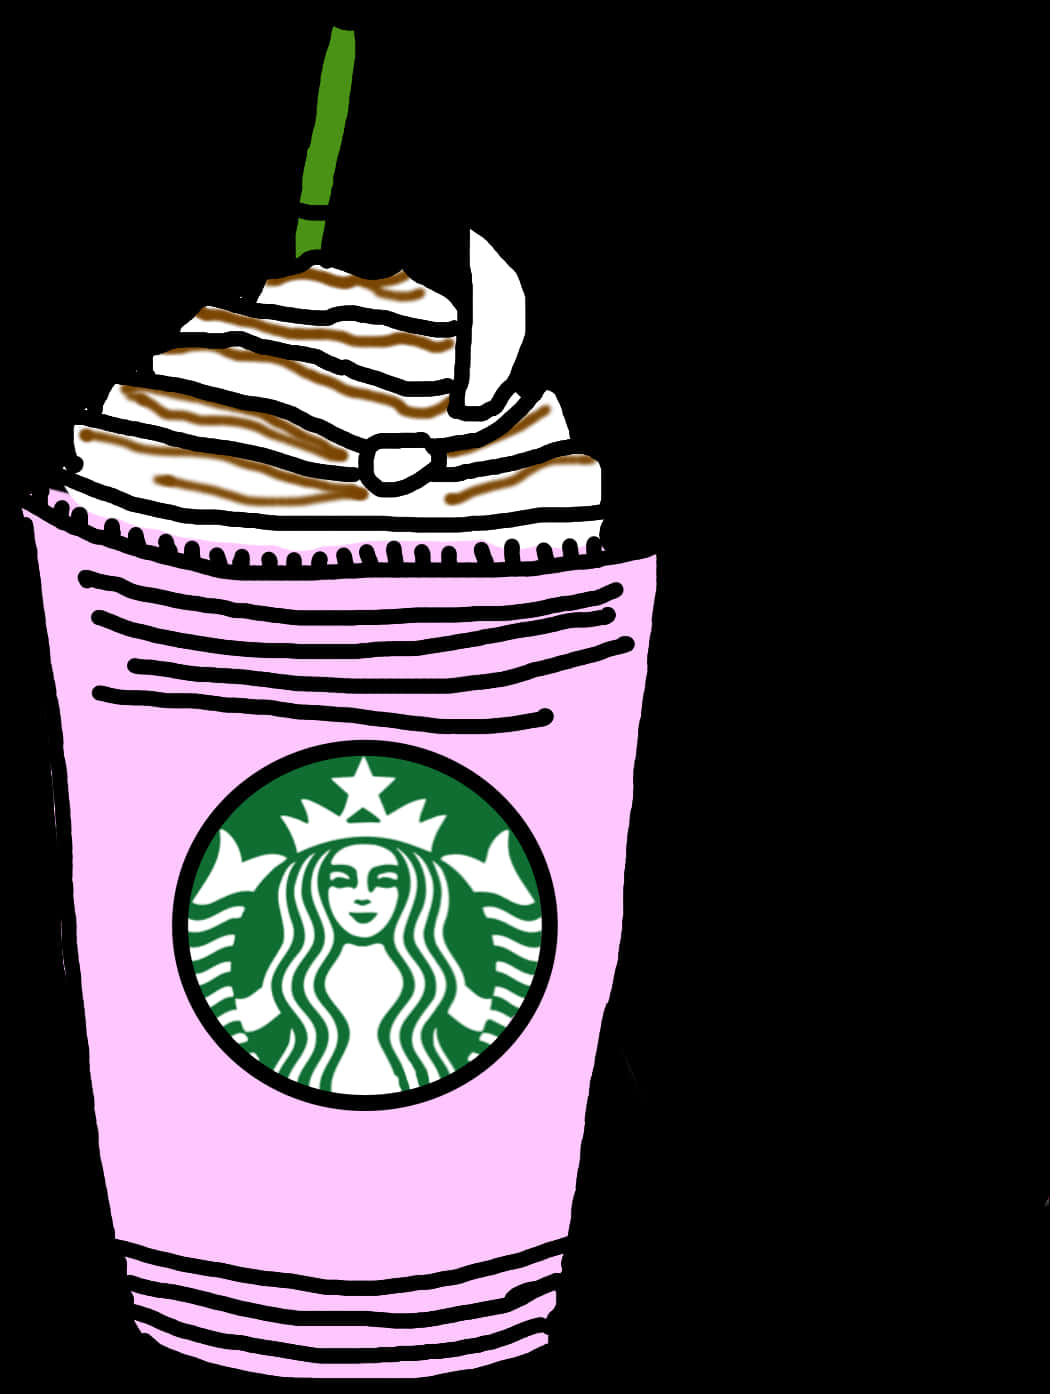 Starbucks Frappuccino Illustration PNG image